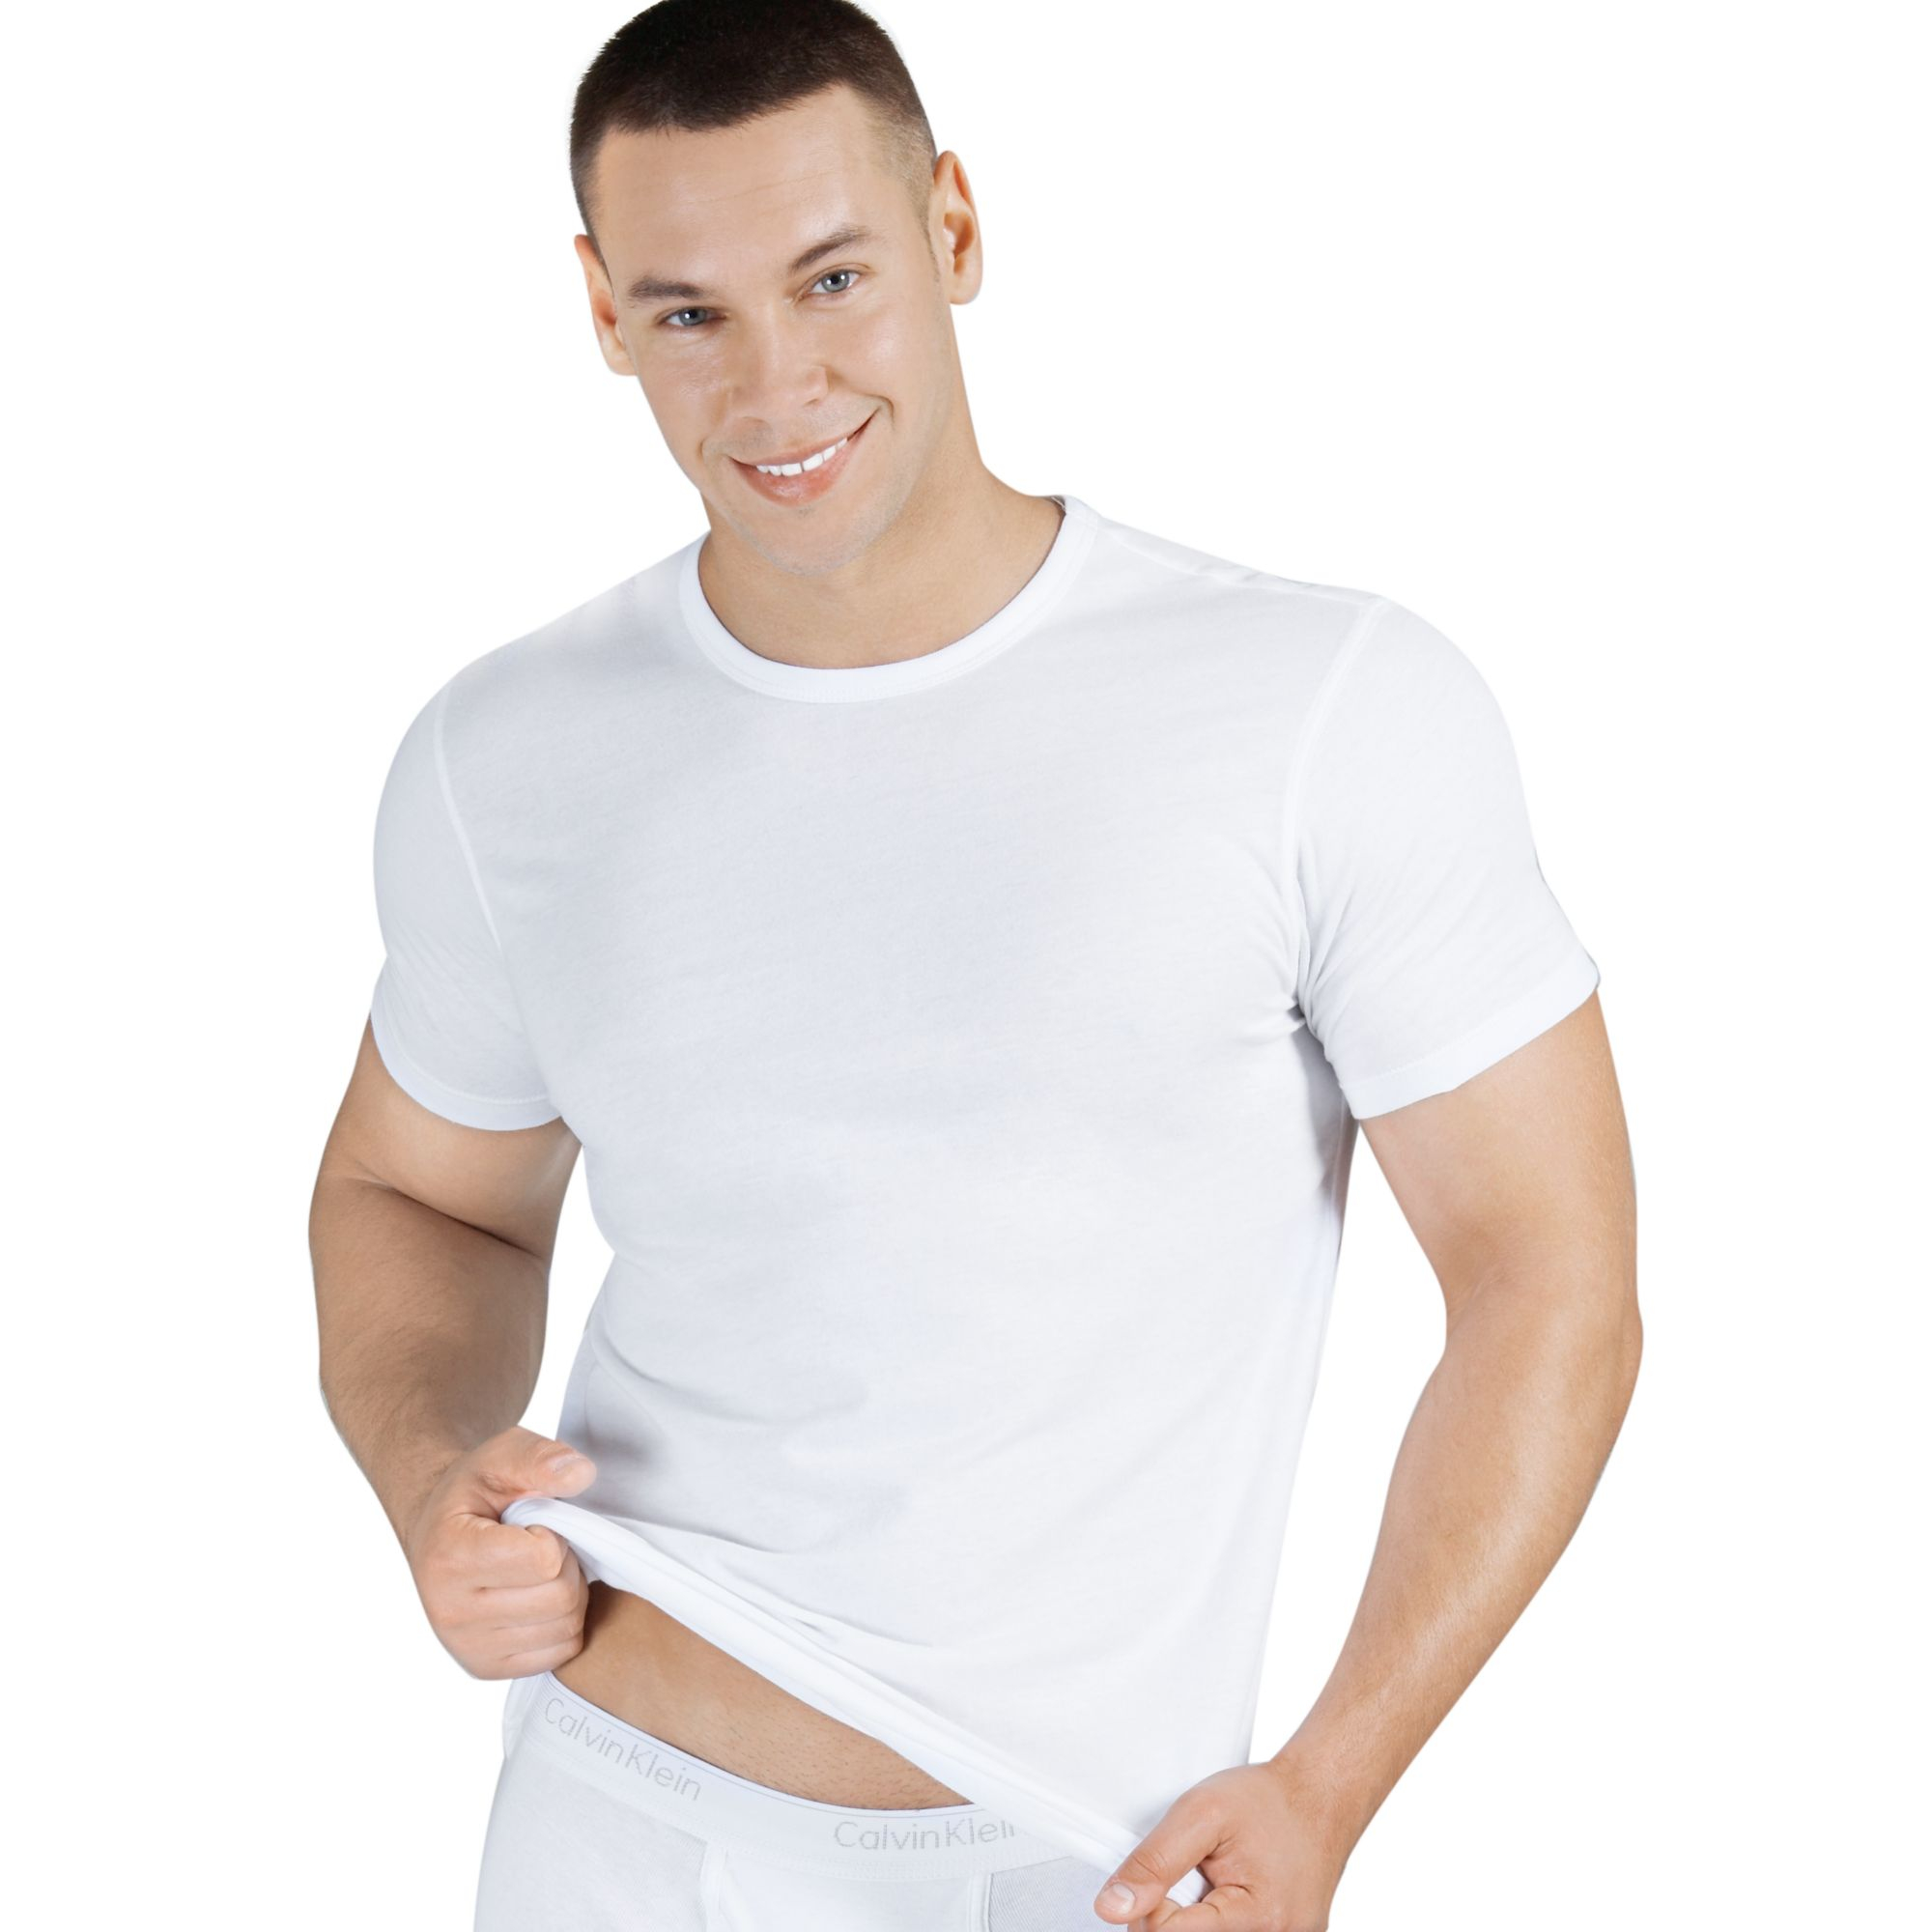 Lyst - Calvin Klein Body Slim Fit T Shirt 3 Pack in White for Men